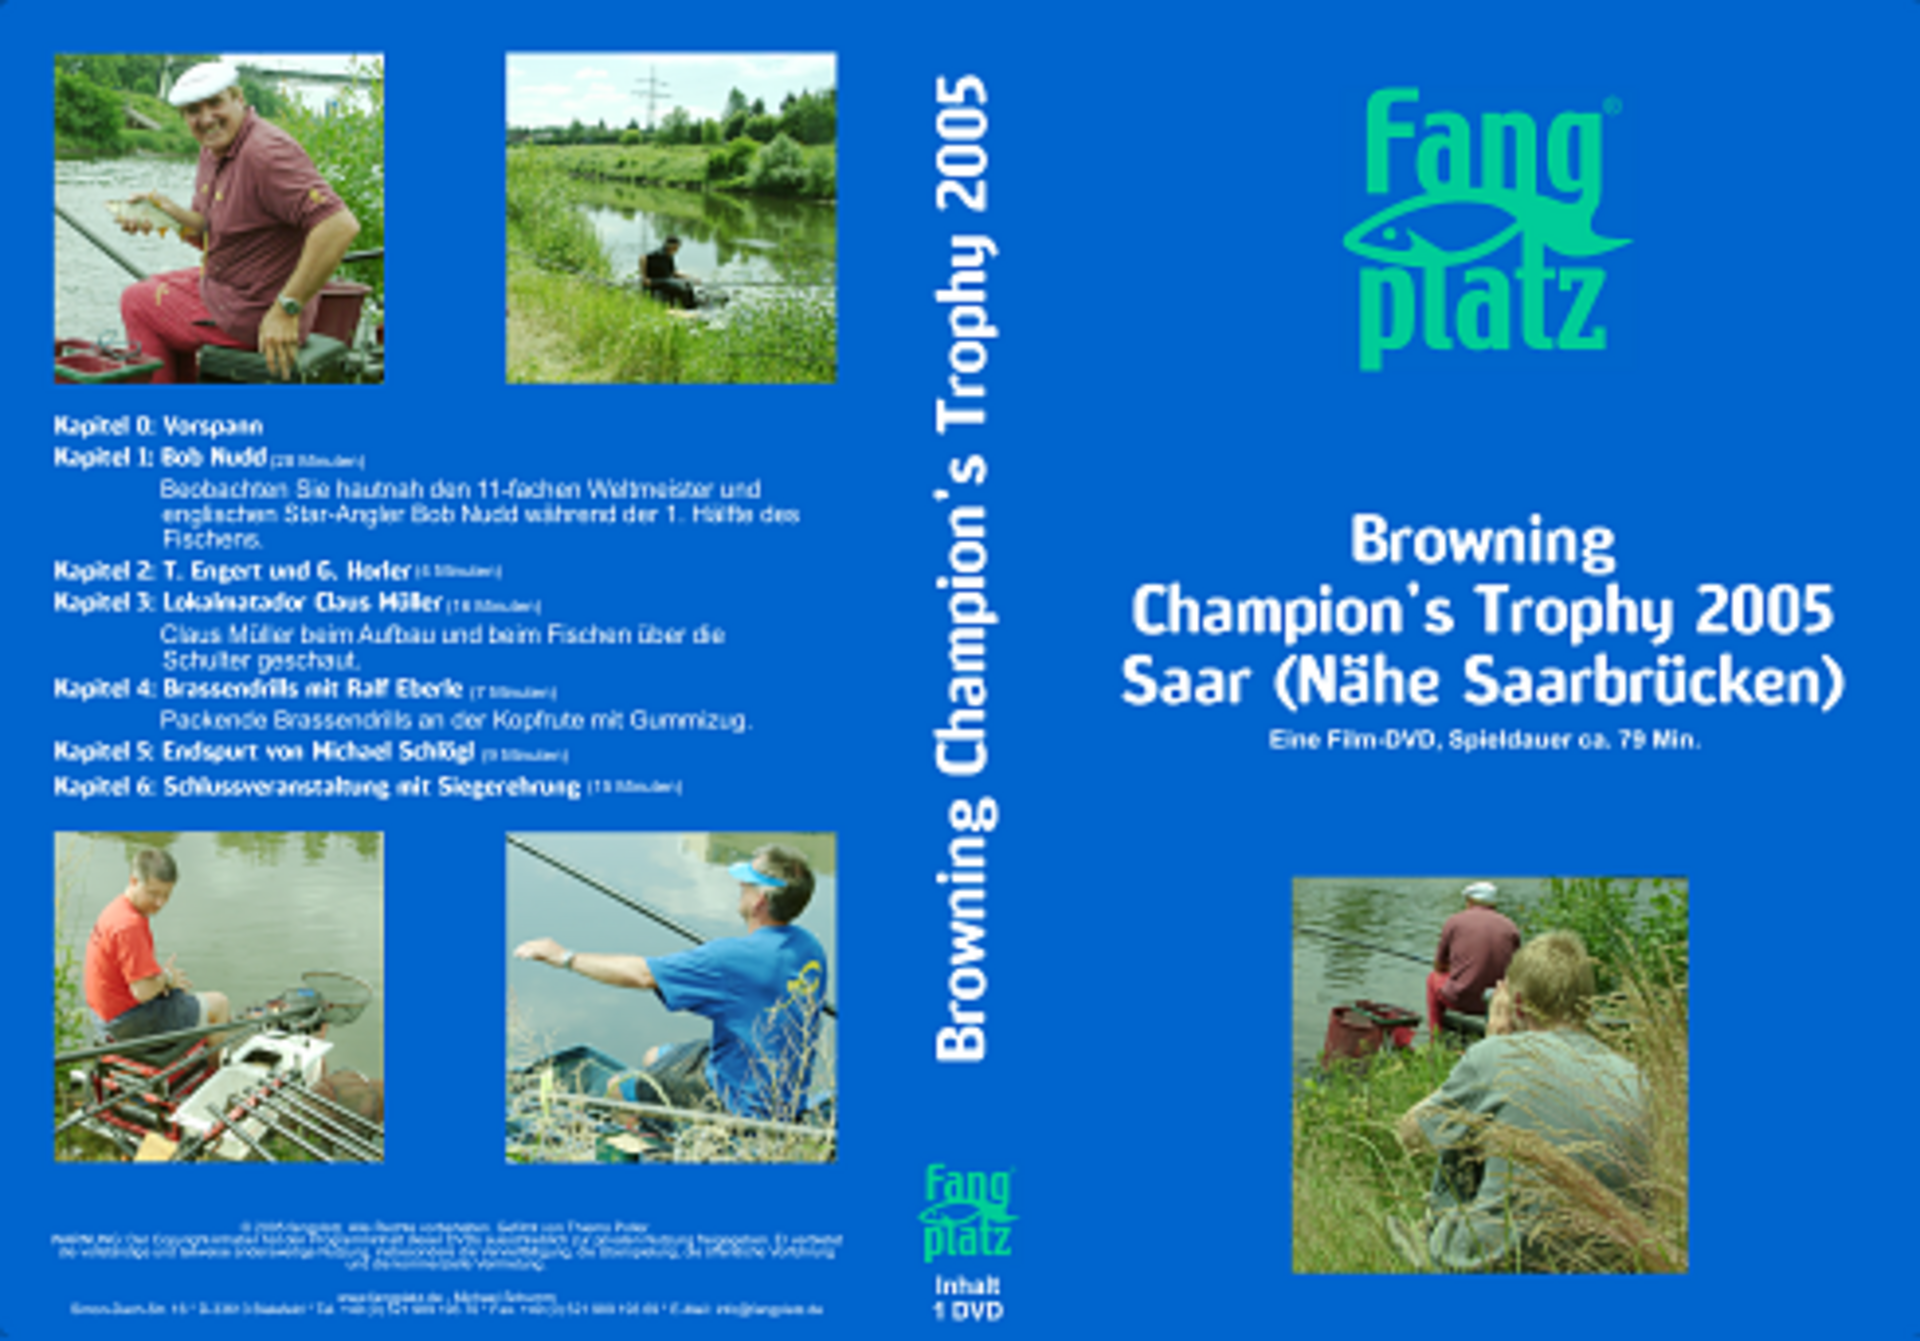  DVD-Cover: fangplatz-Film über die Browning Champions Trophy 2005